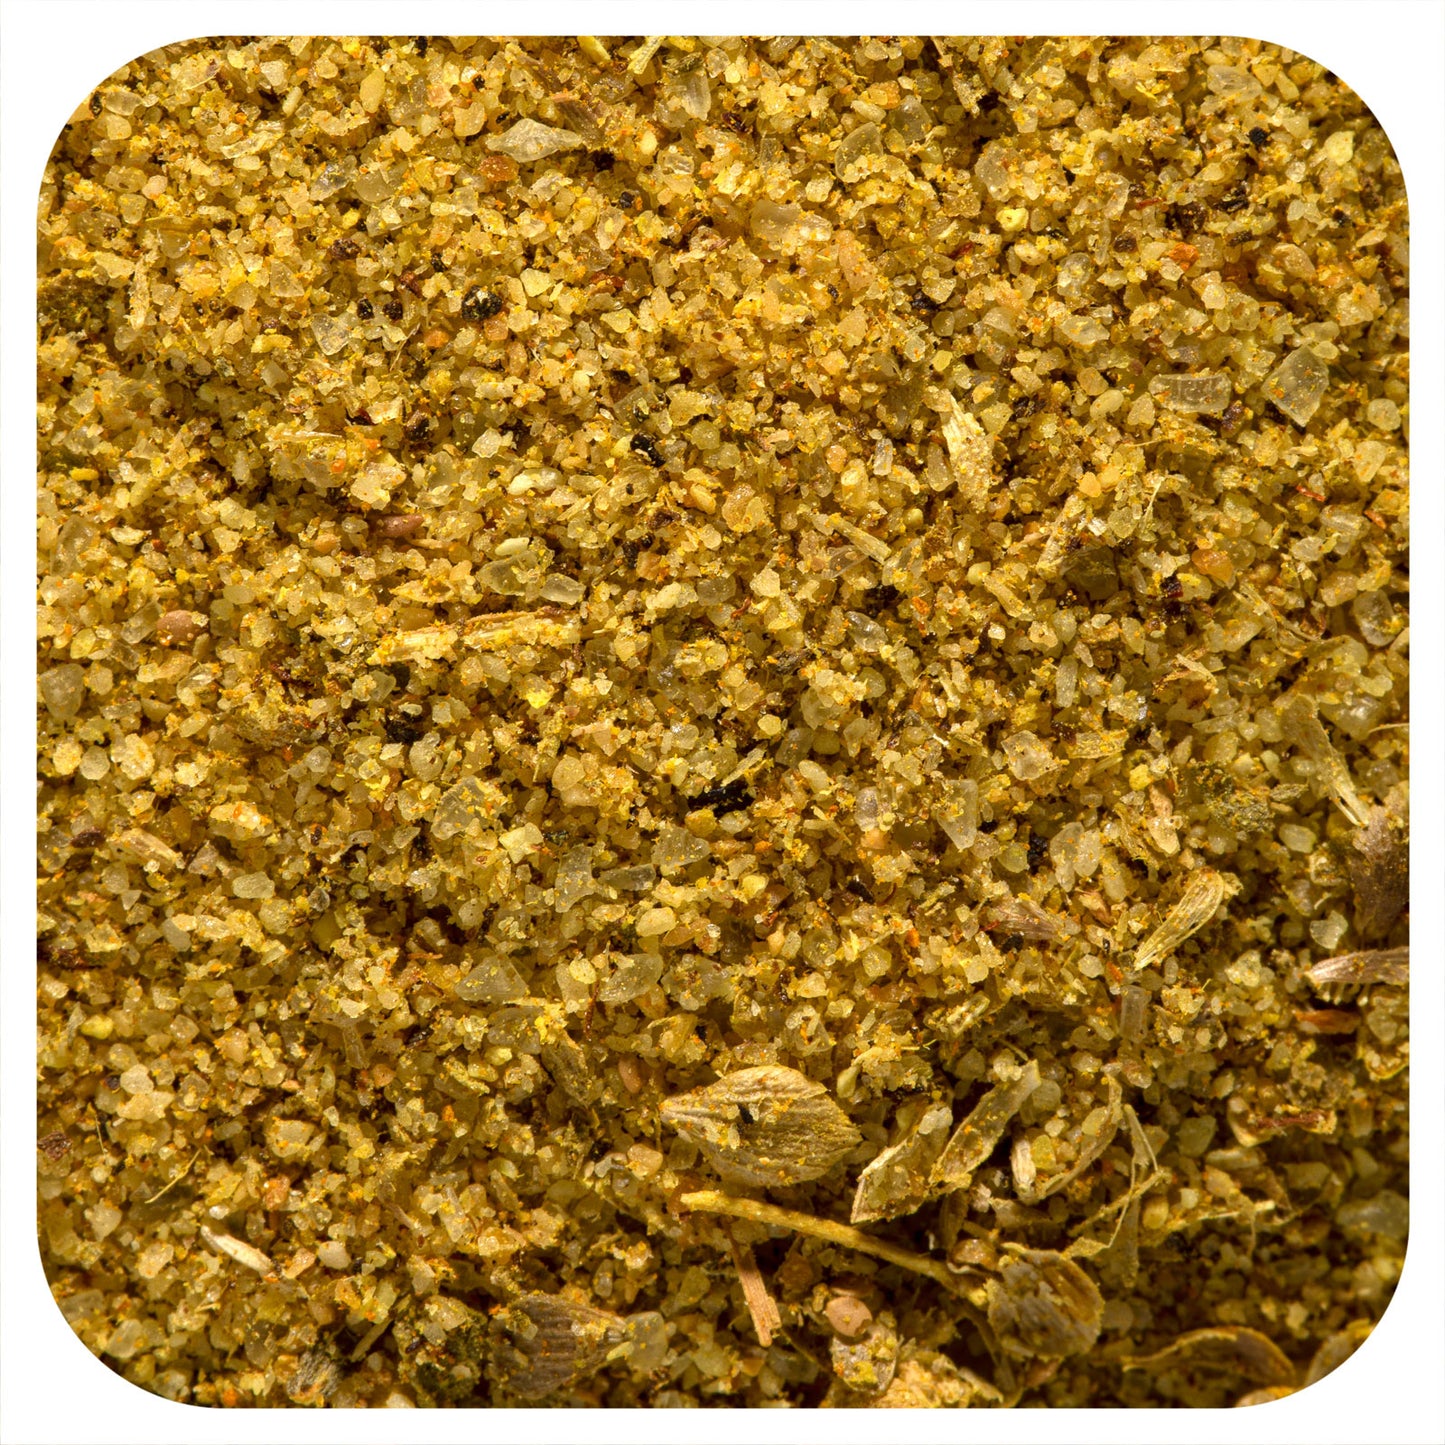 California Gold Nutrition, FOODS - Organic Adobo Seasoning, 6.53 oz (185 g)